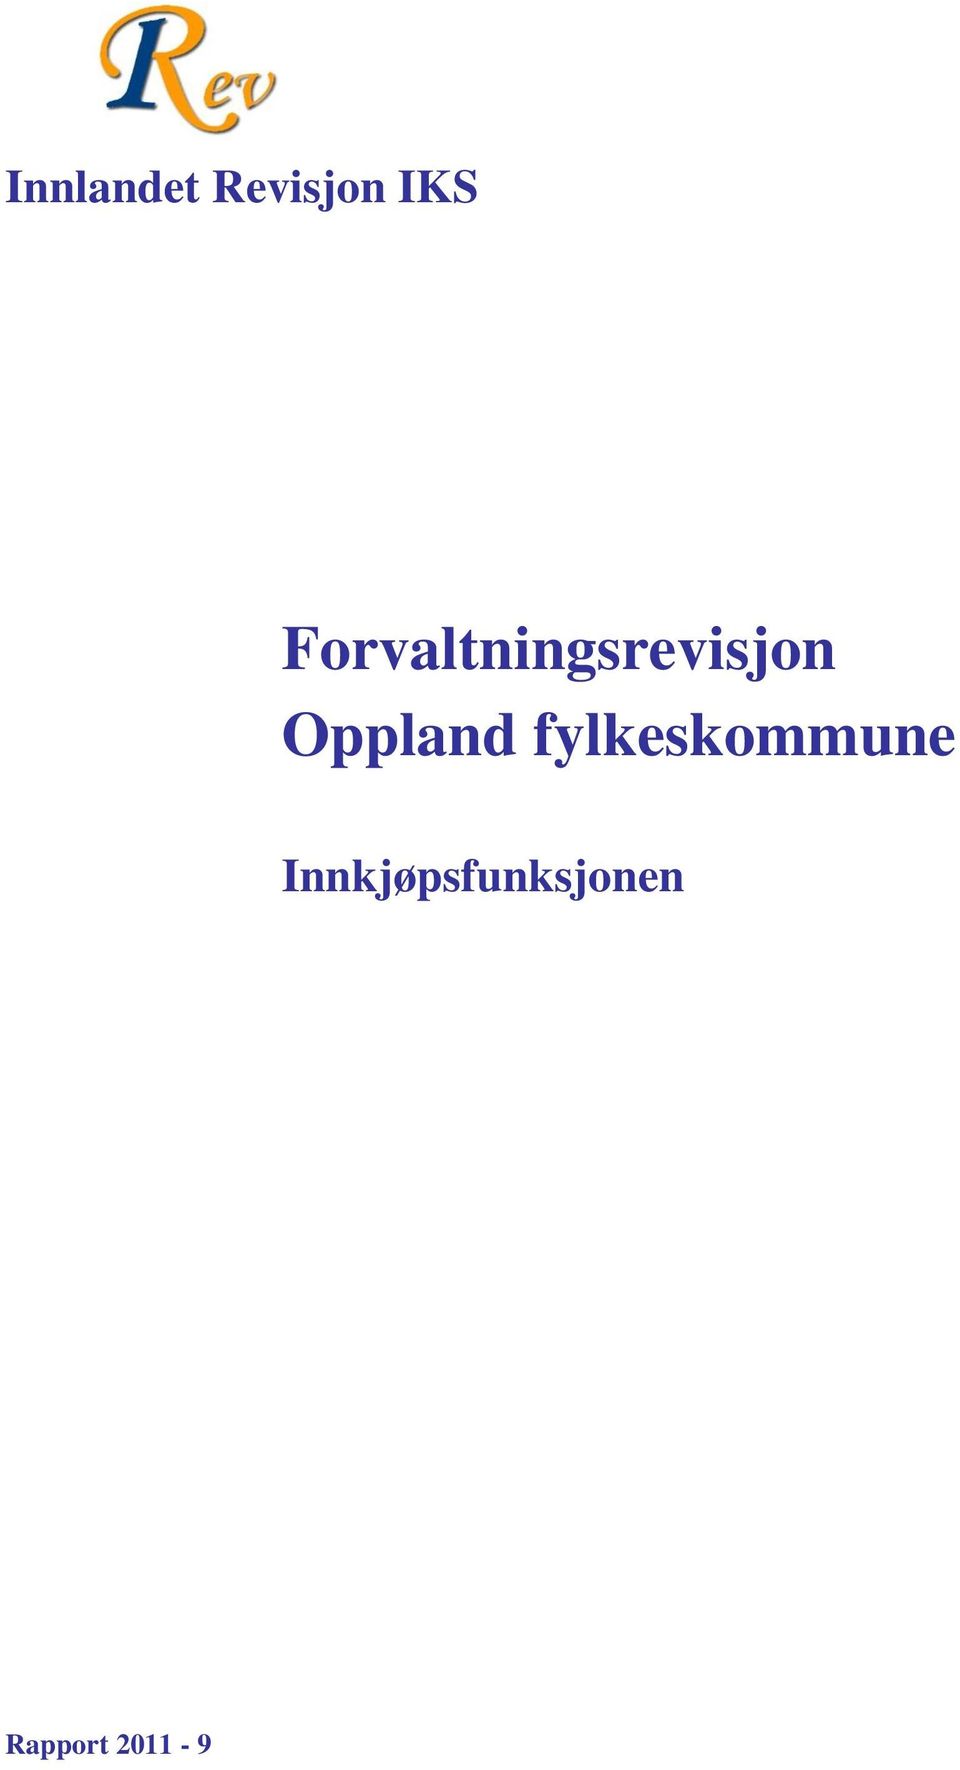 Oppland fylkeskommune